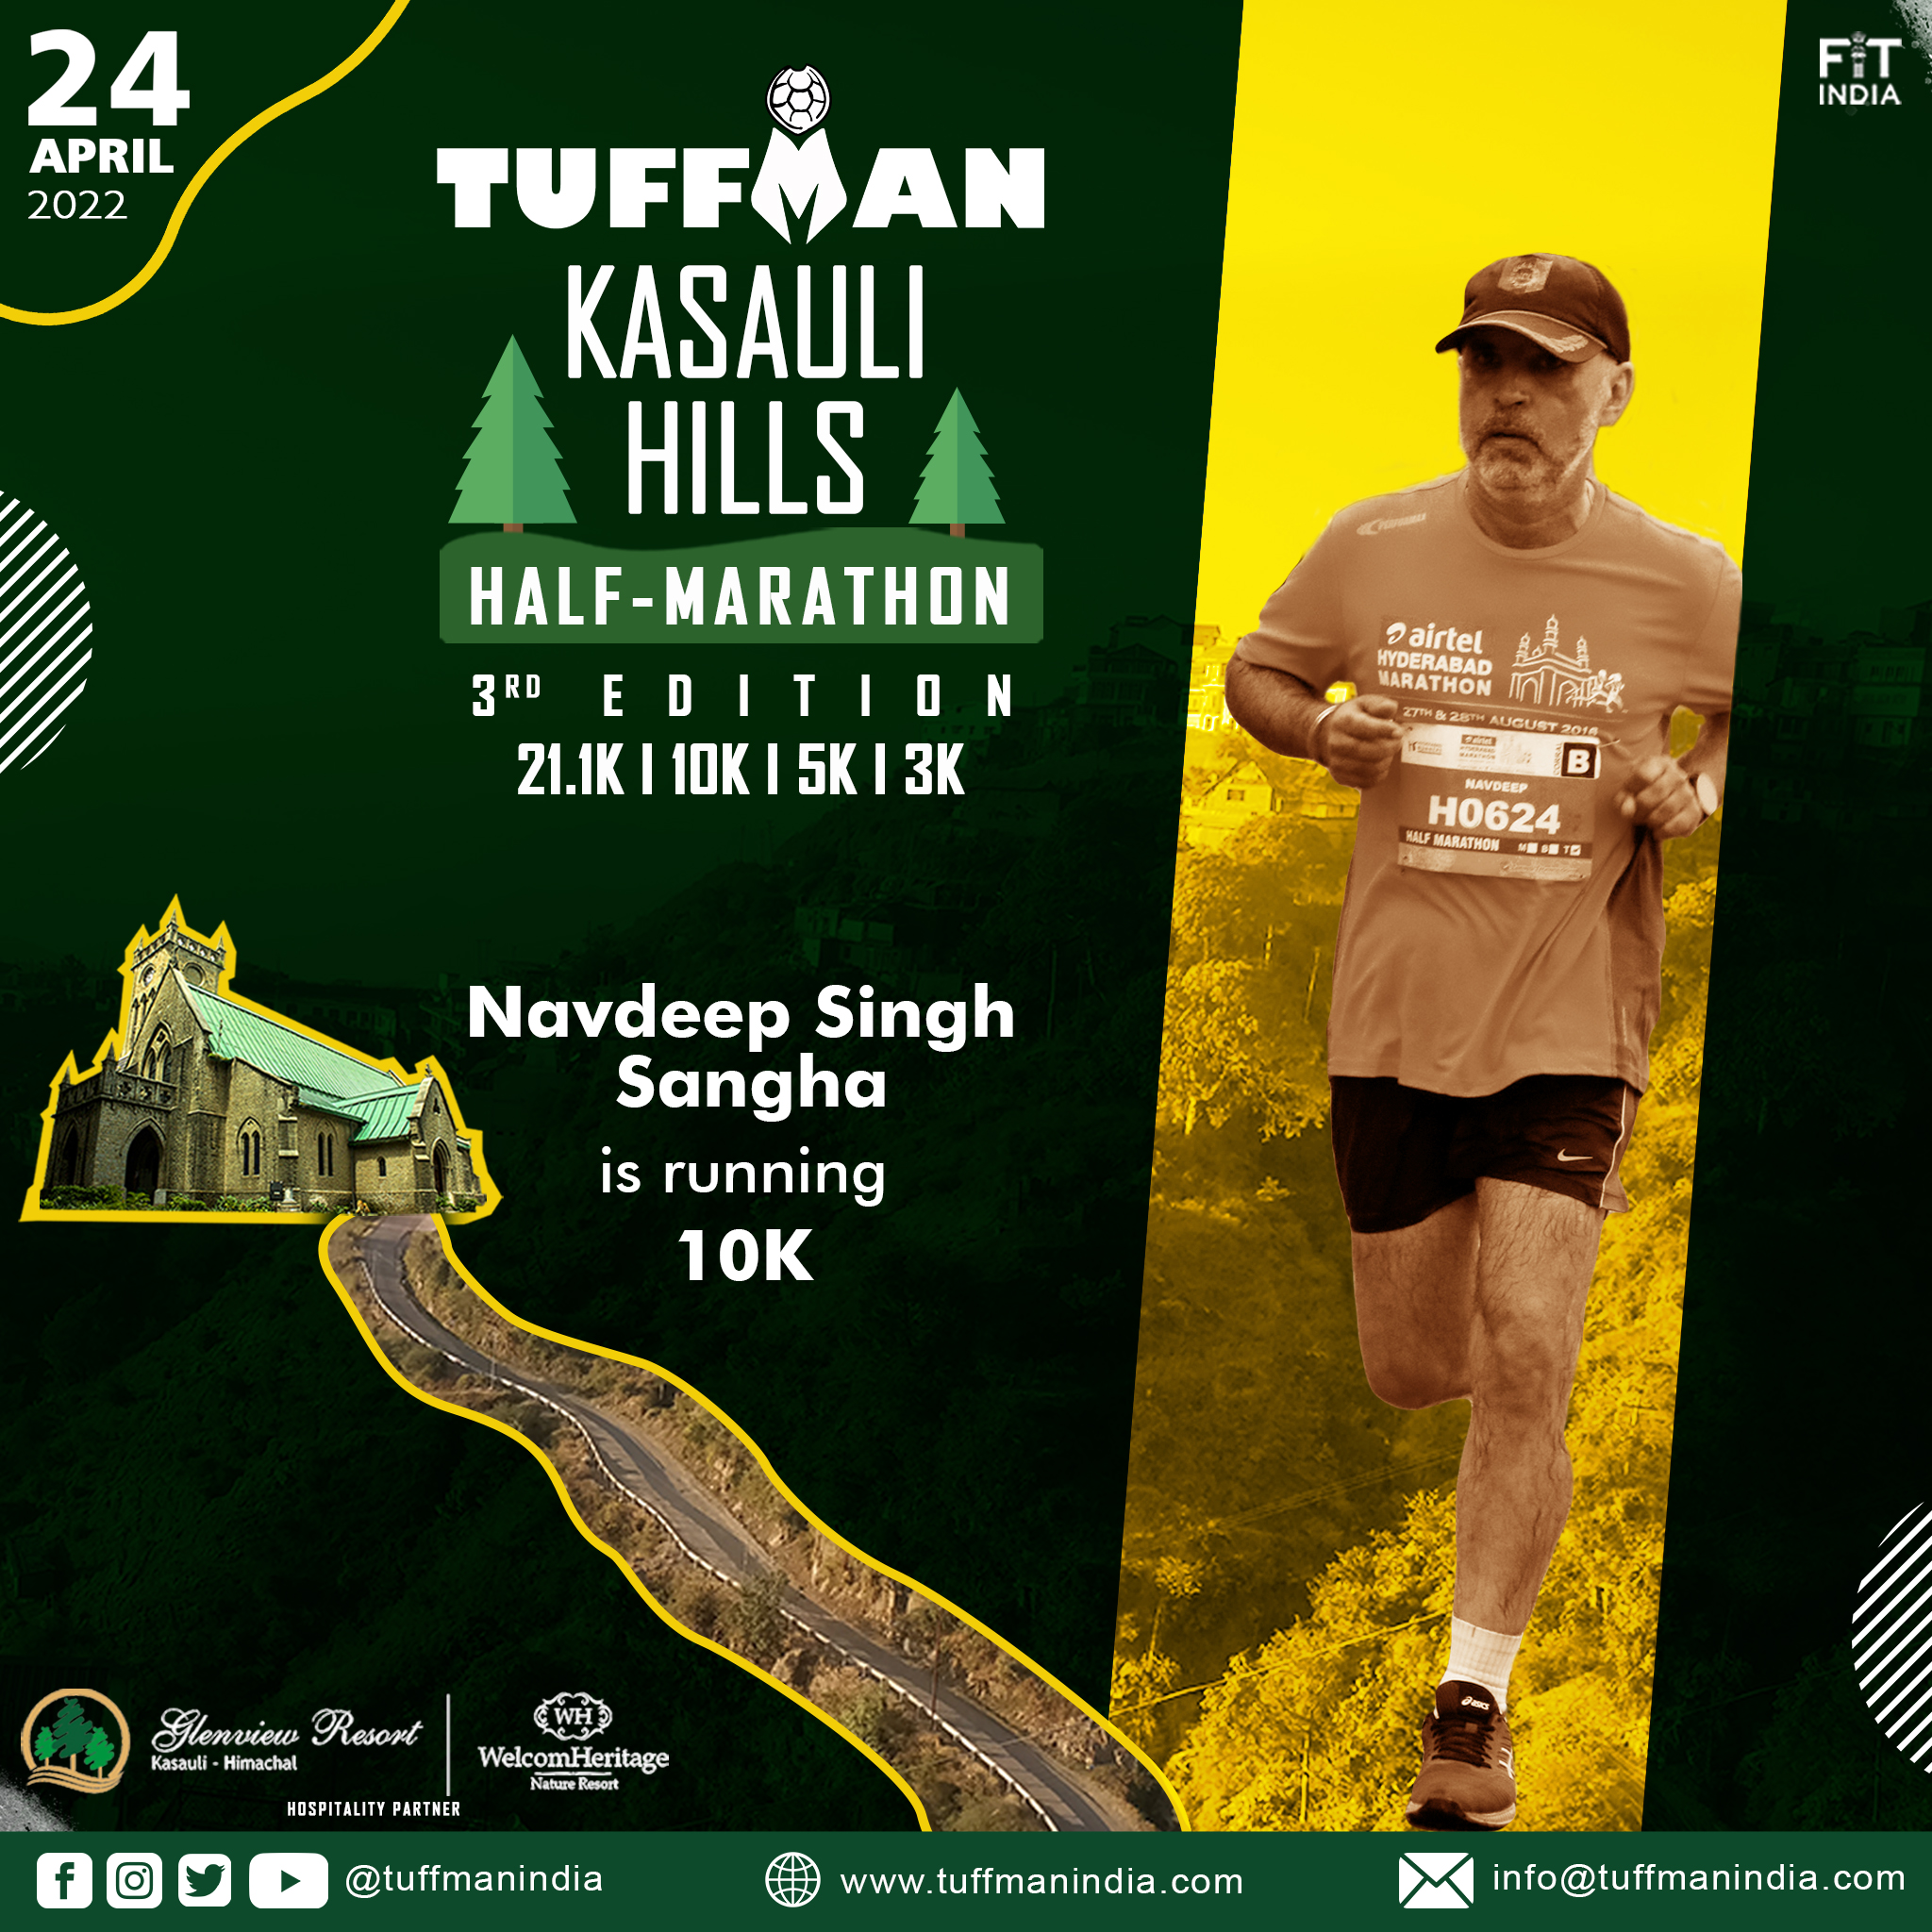 Tuffman Kasauli Hills Half Marathon